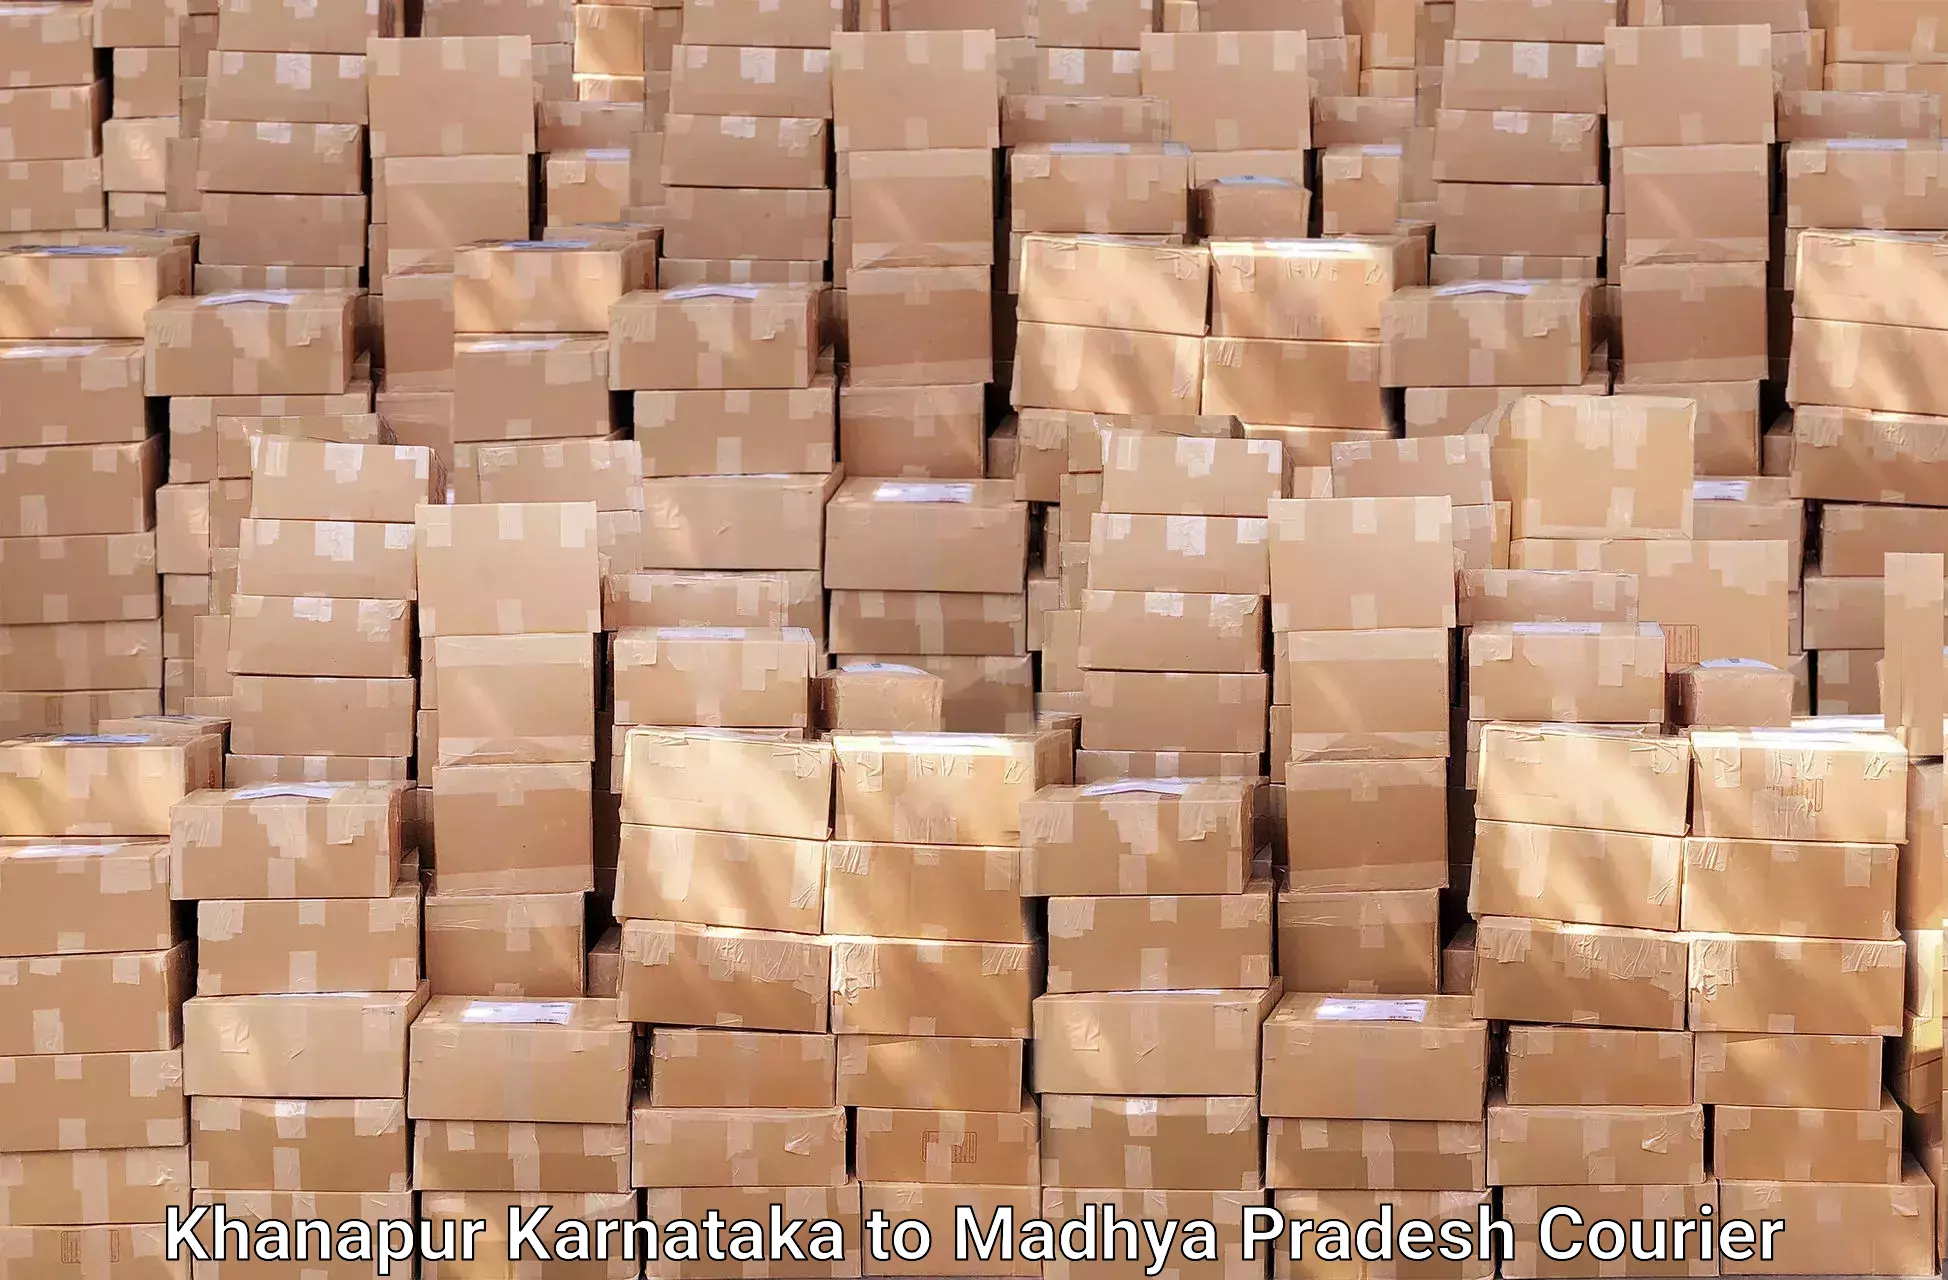 Quality relocation assistance Khanapur Karnataka to Madhya Pradesh